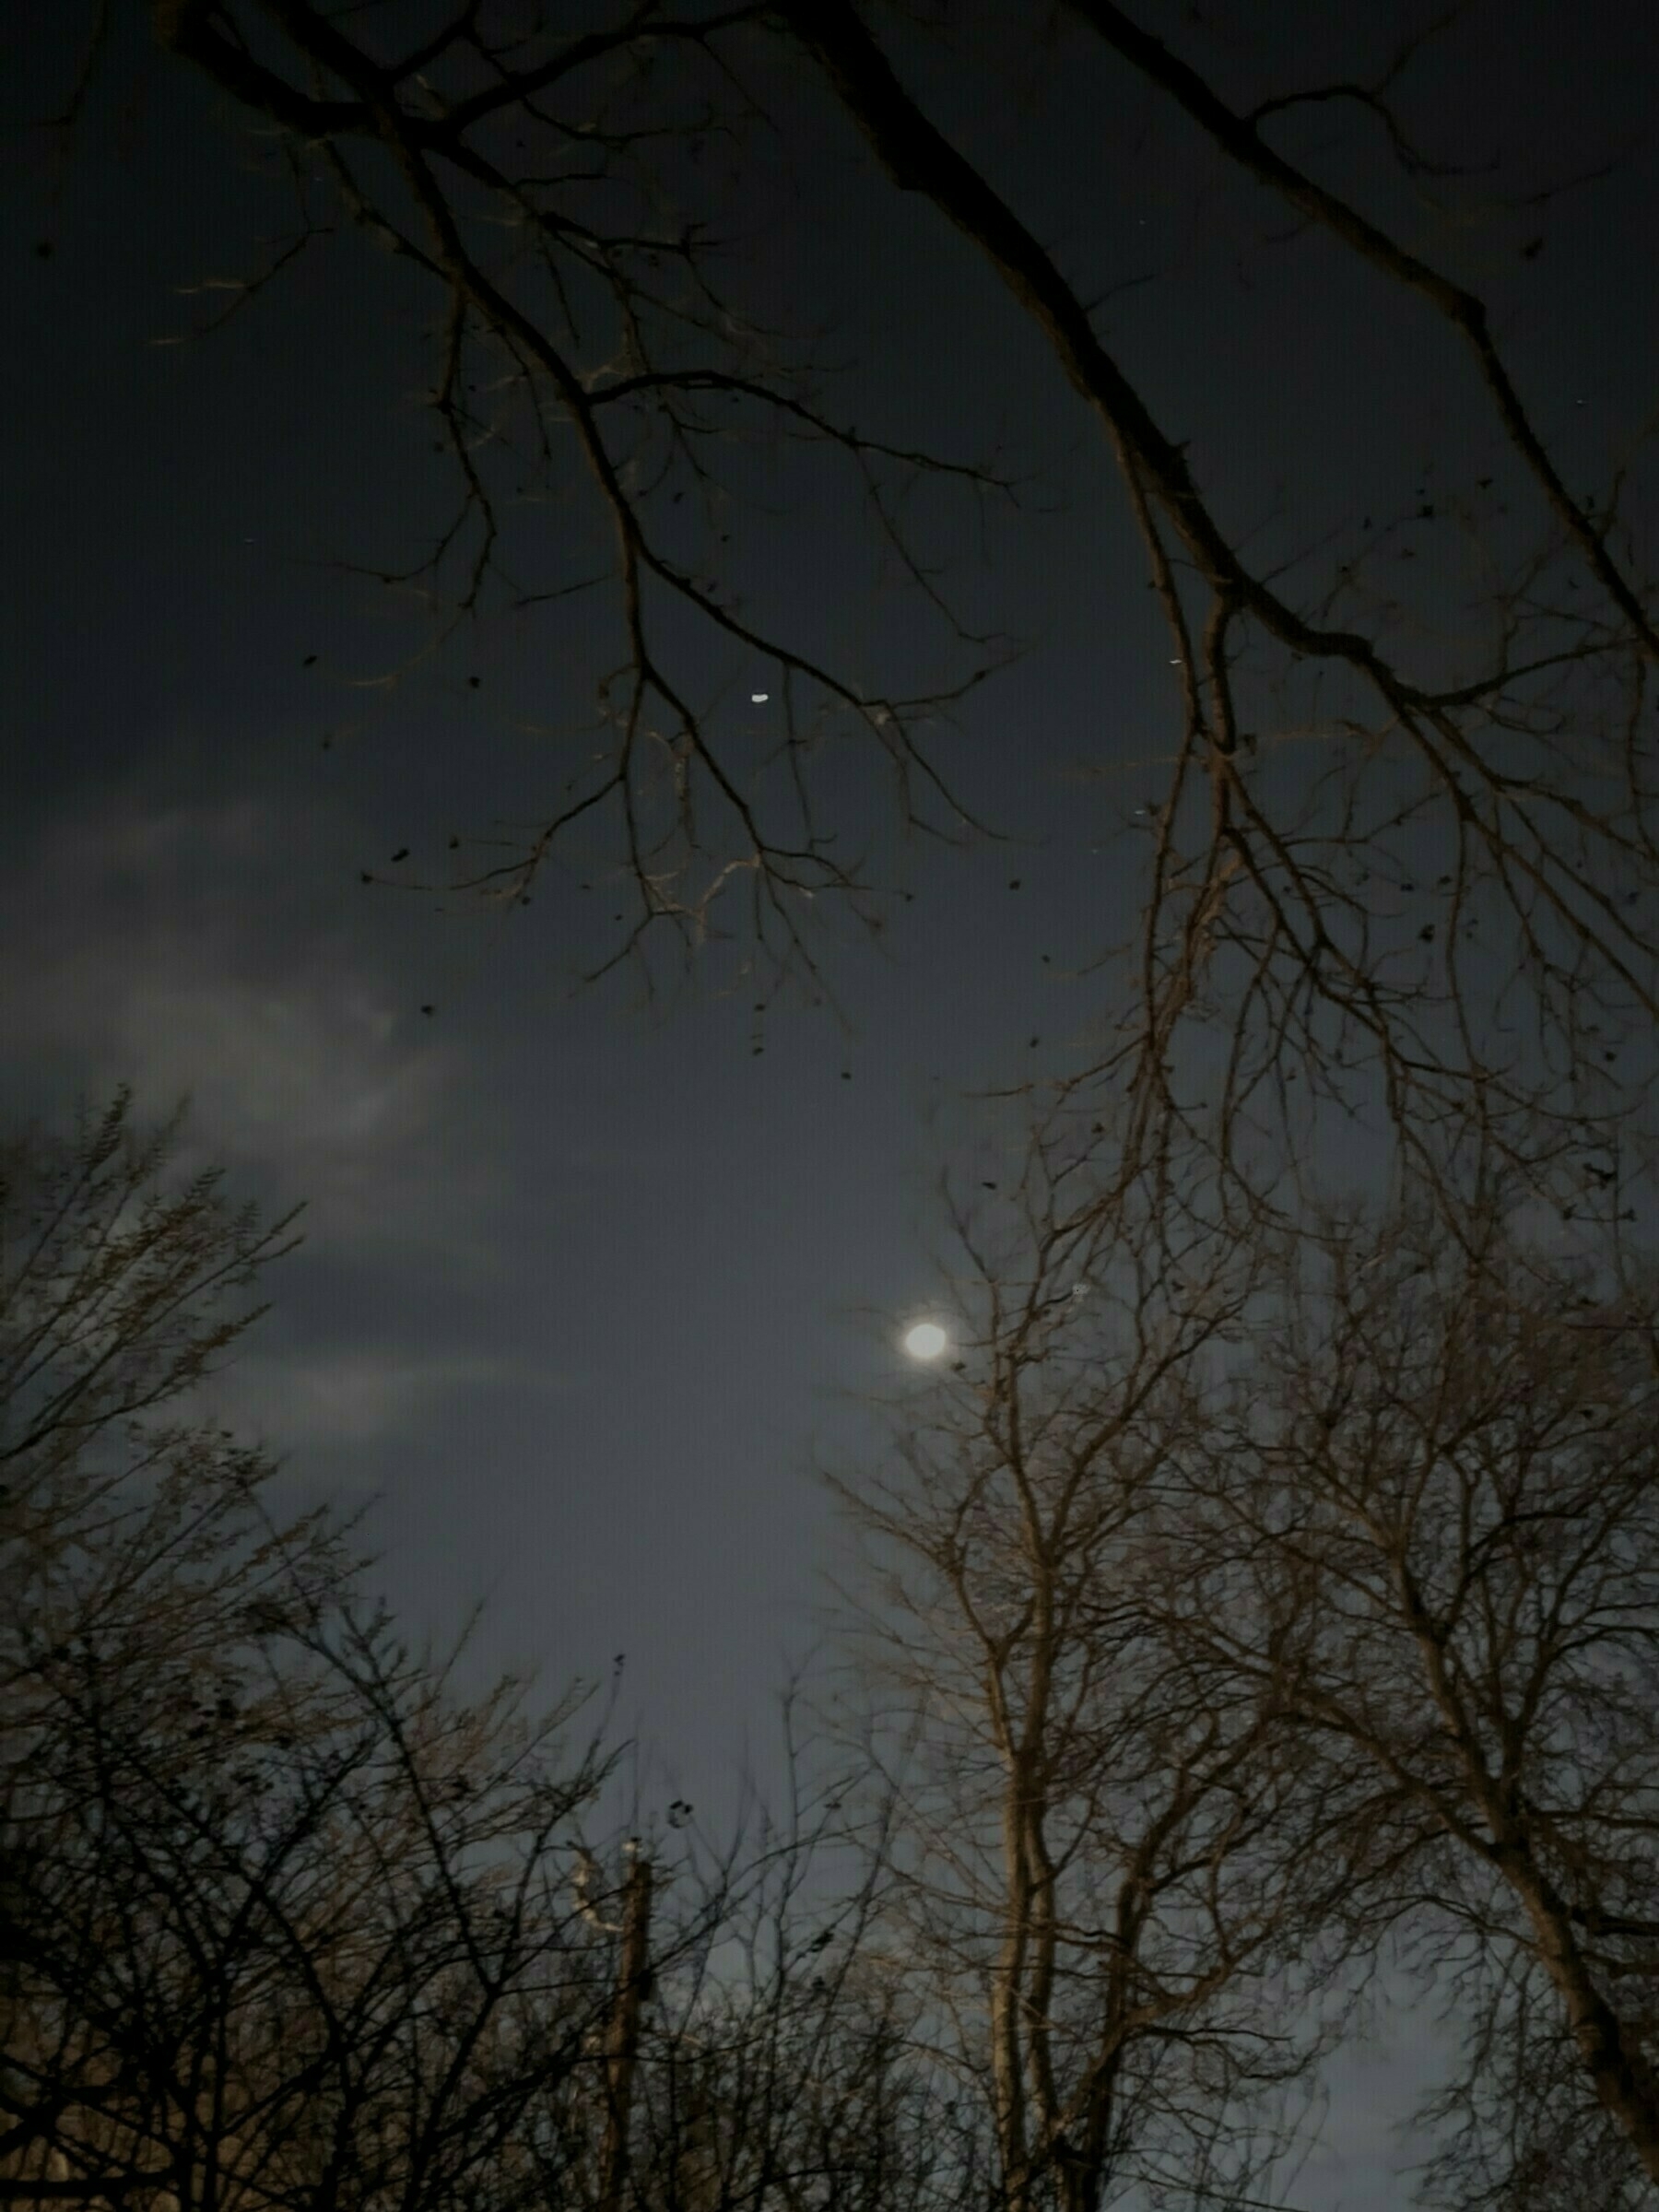 Moon and stars through tree branches; John Prine